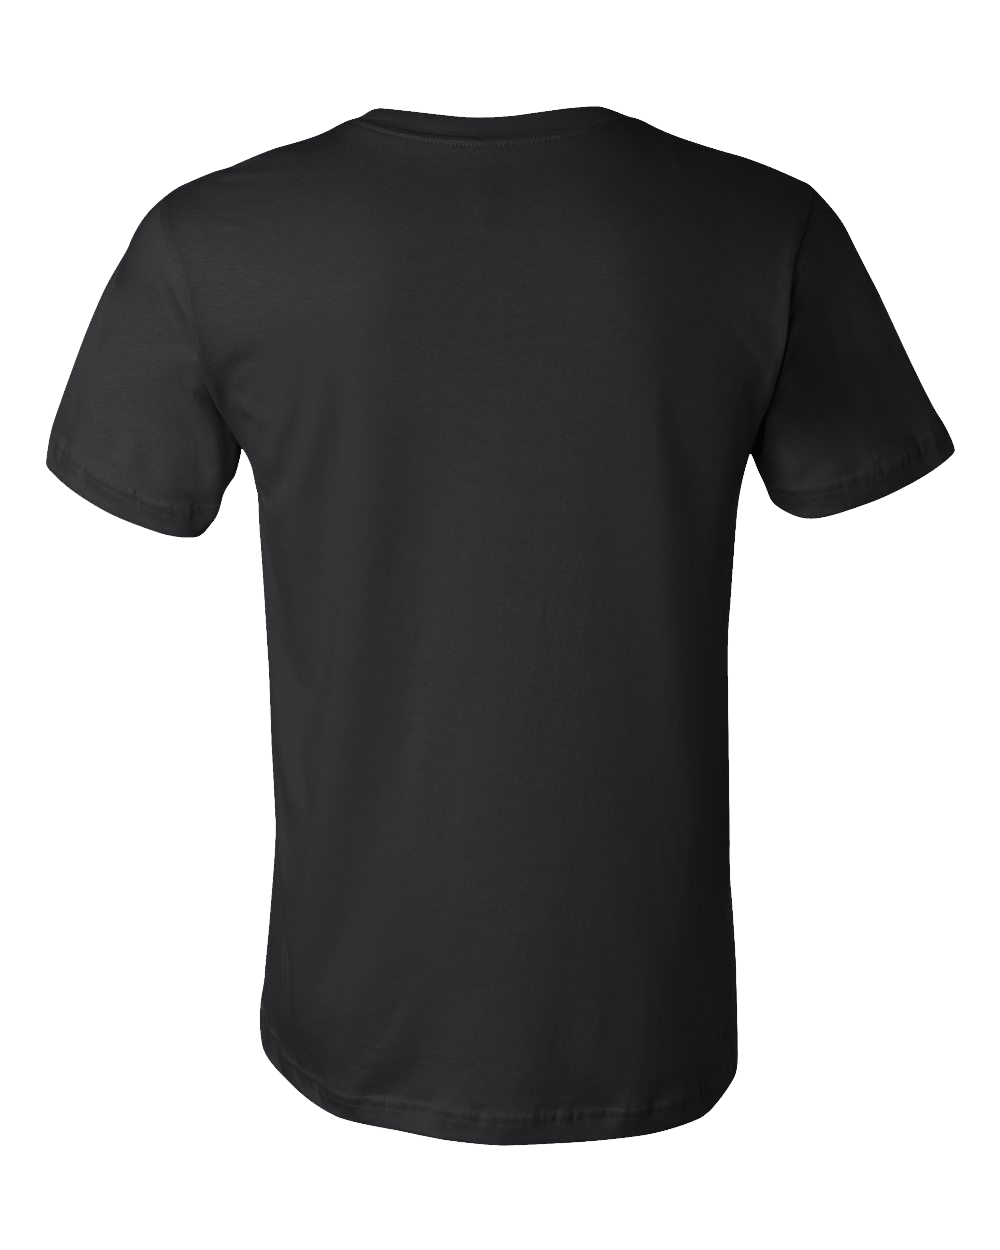 Standard Black Langdon, ND | Retro, Vintage Style North Dakota Pride  T-shirt